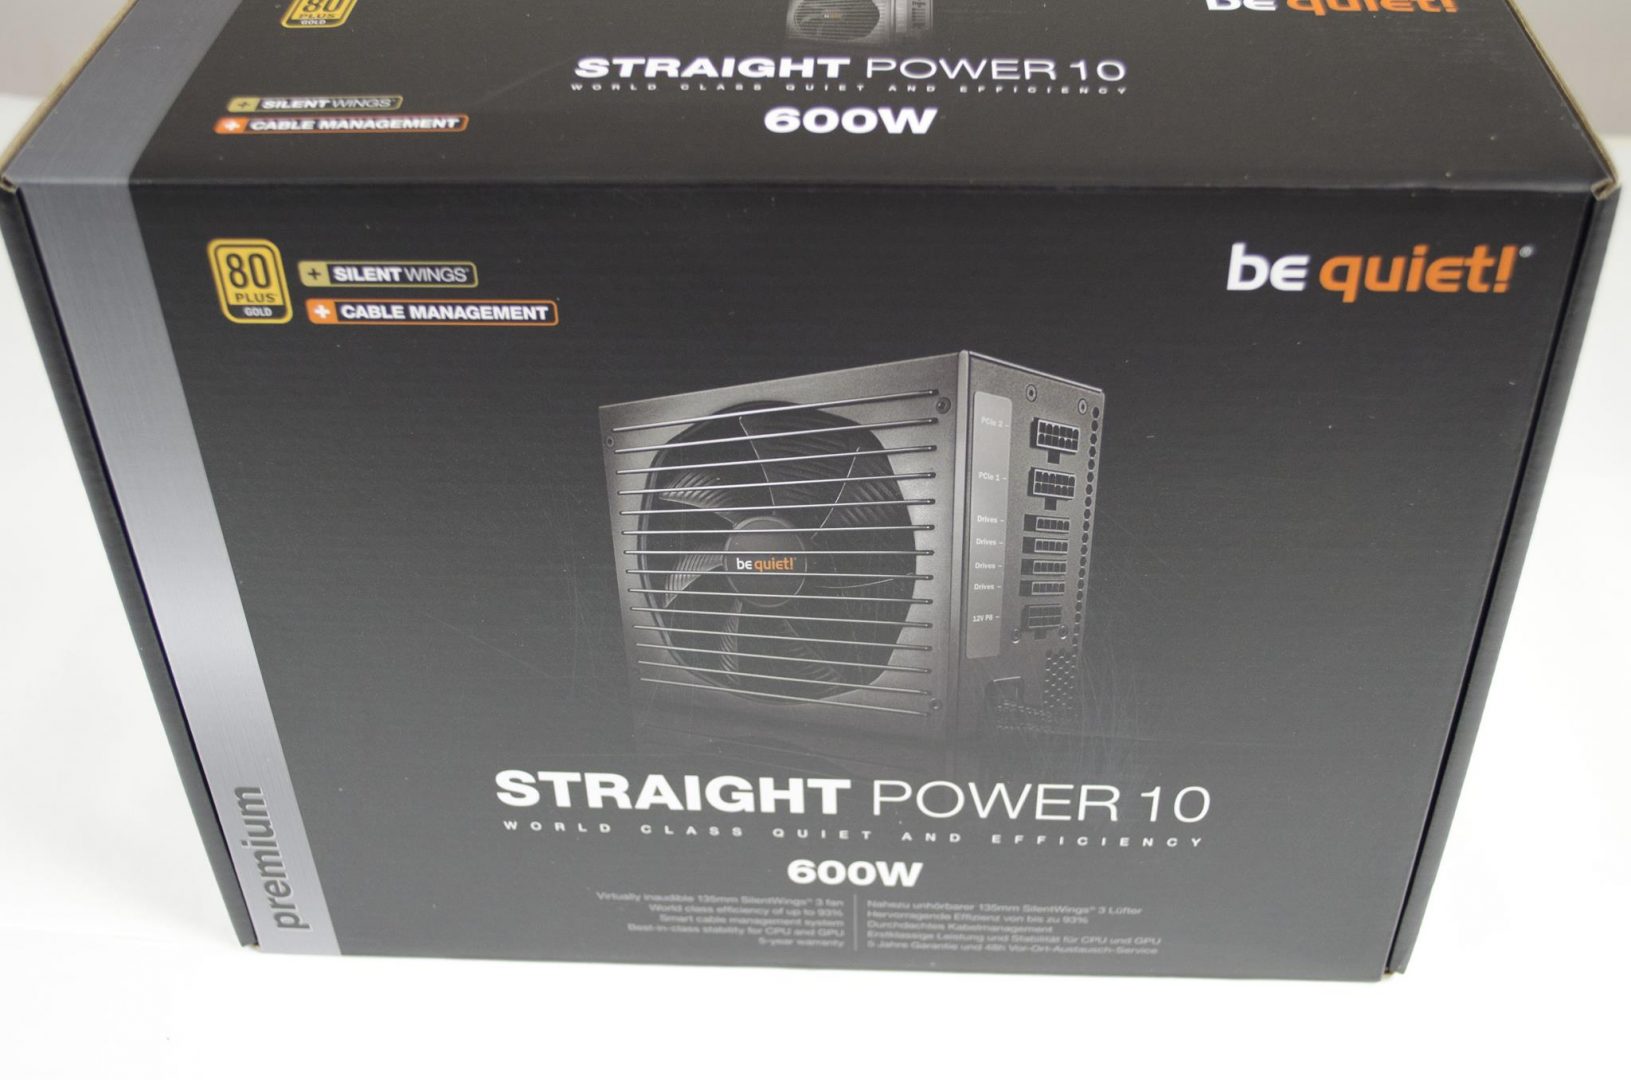 be quiet! Straight Power 10 600W Power Supply